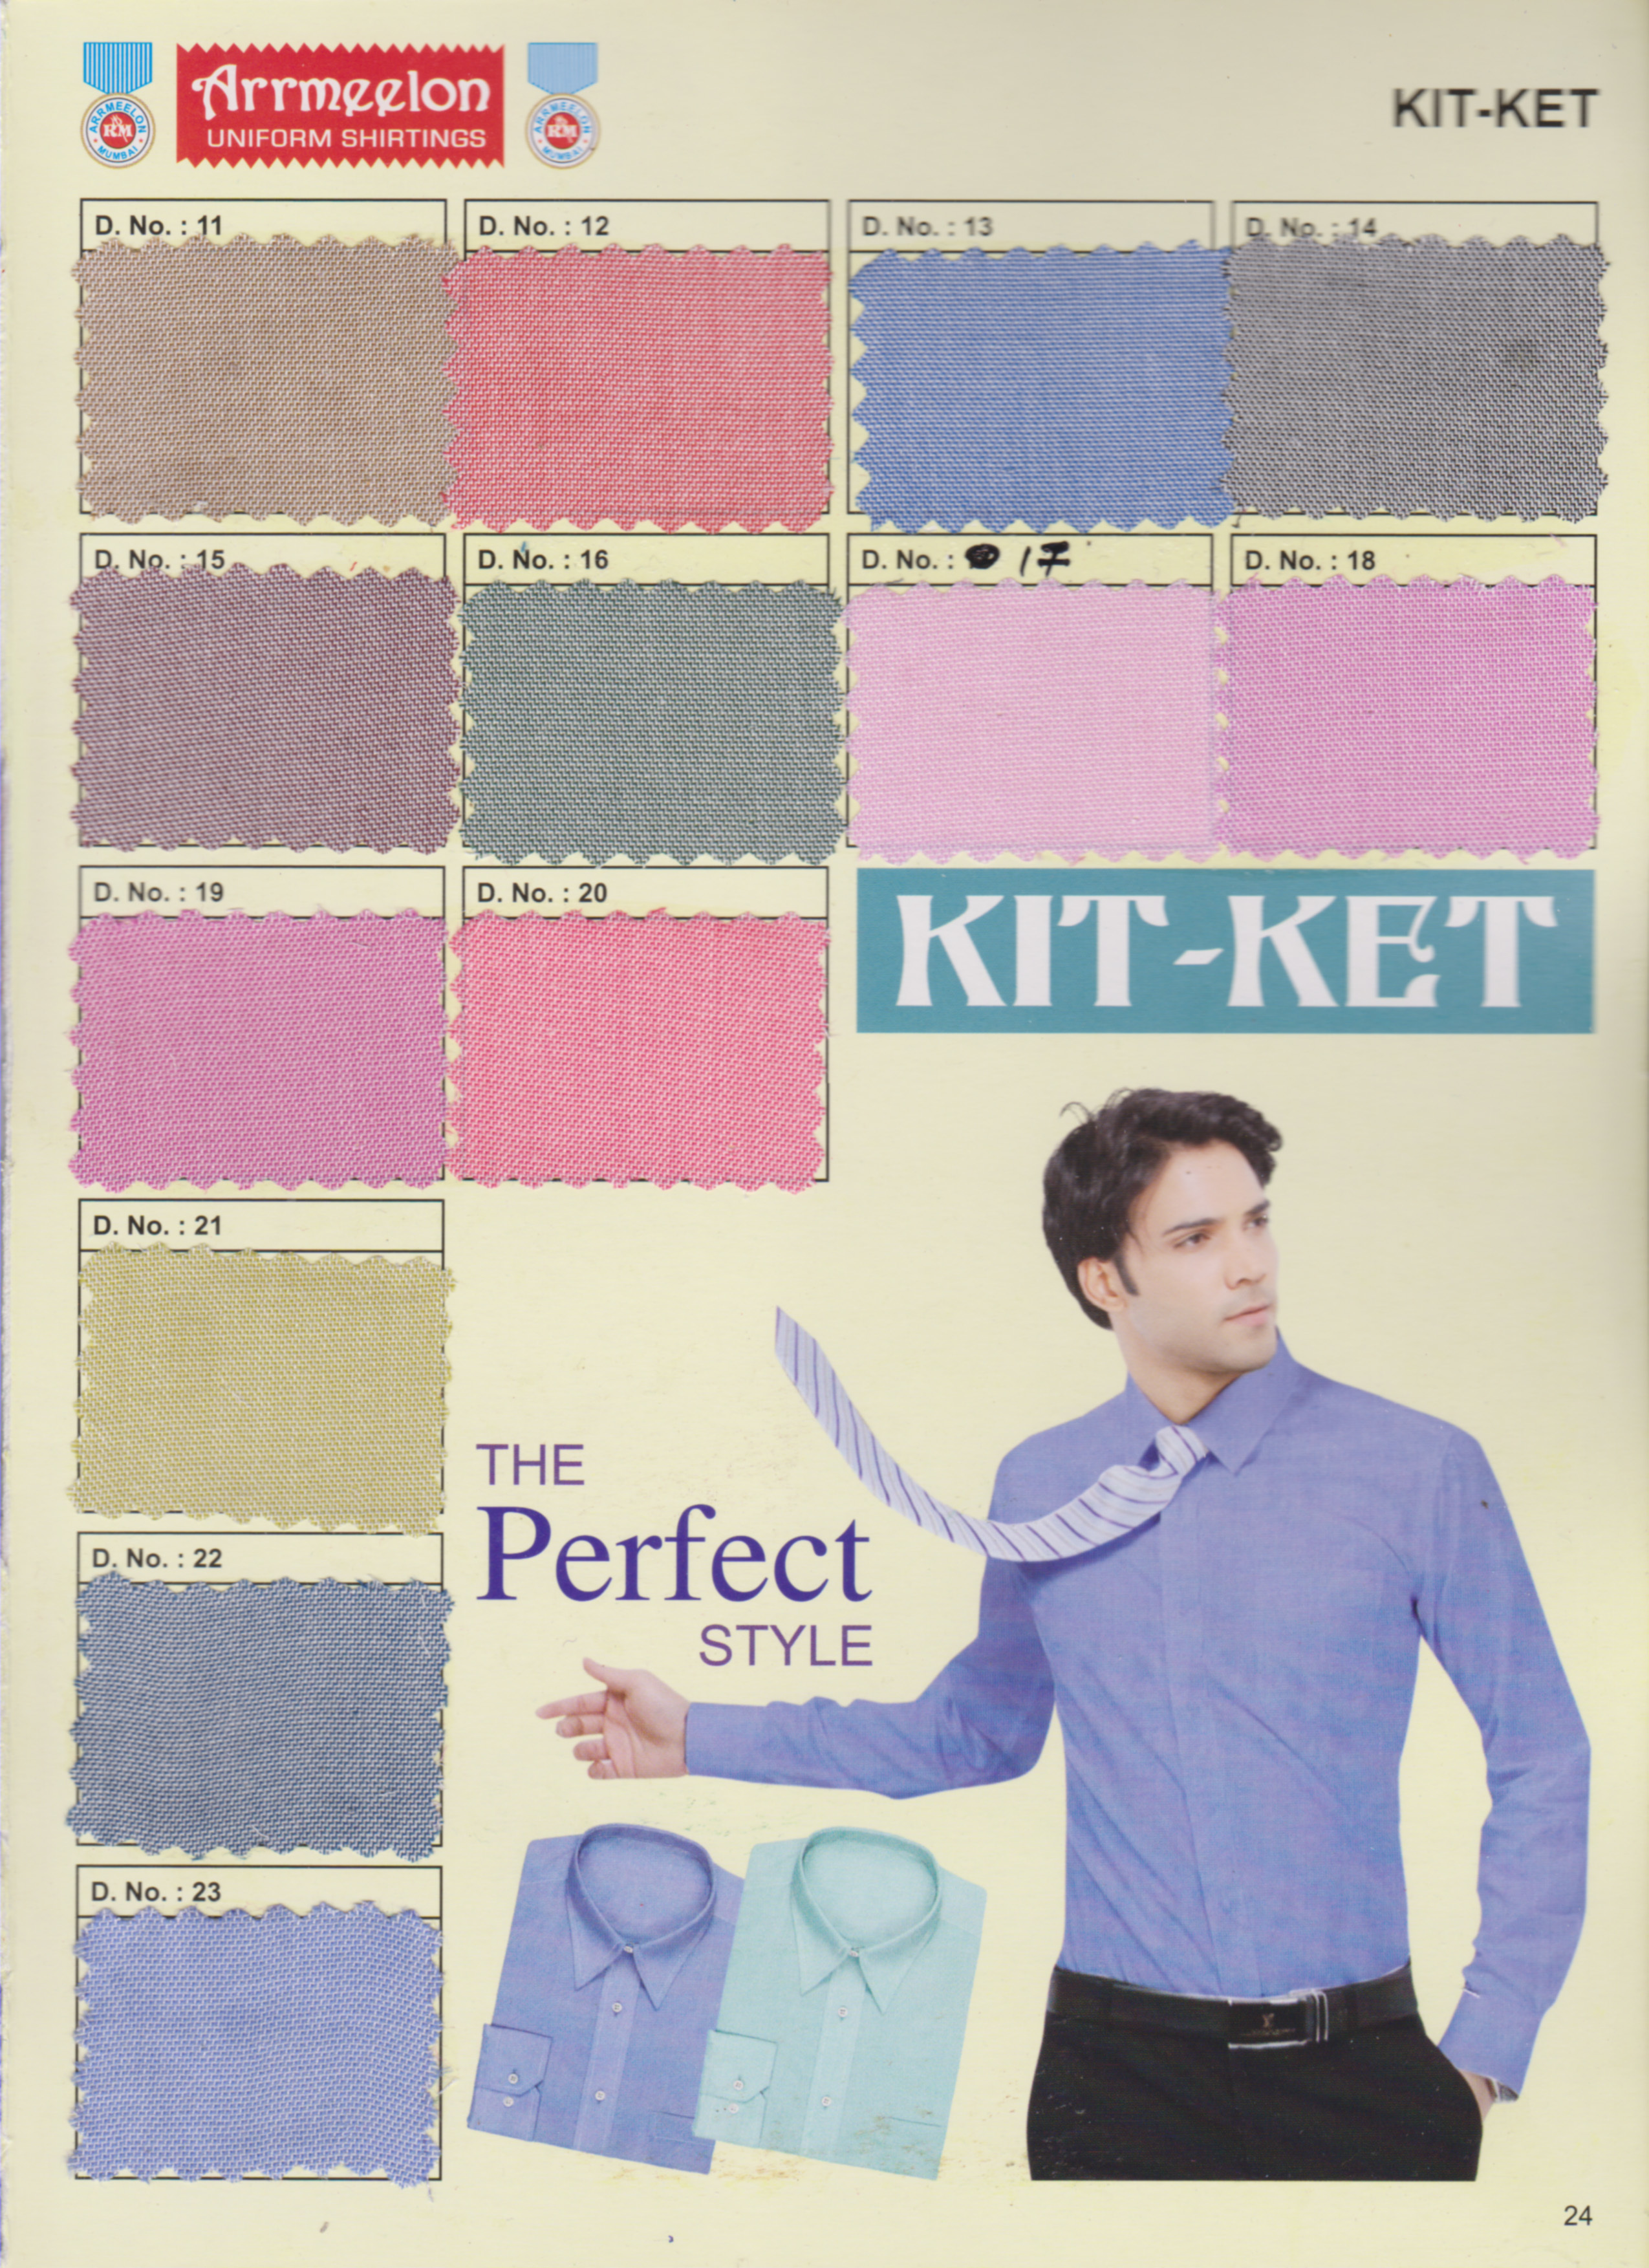 Kit-Ket Uniform Fabric